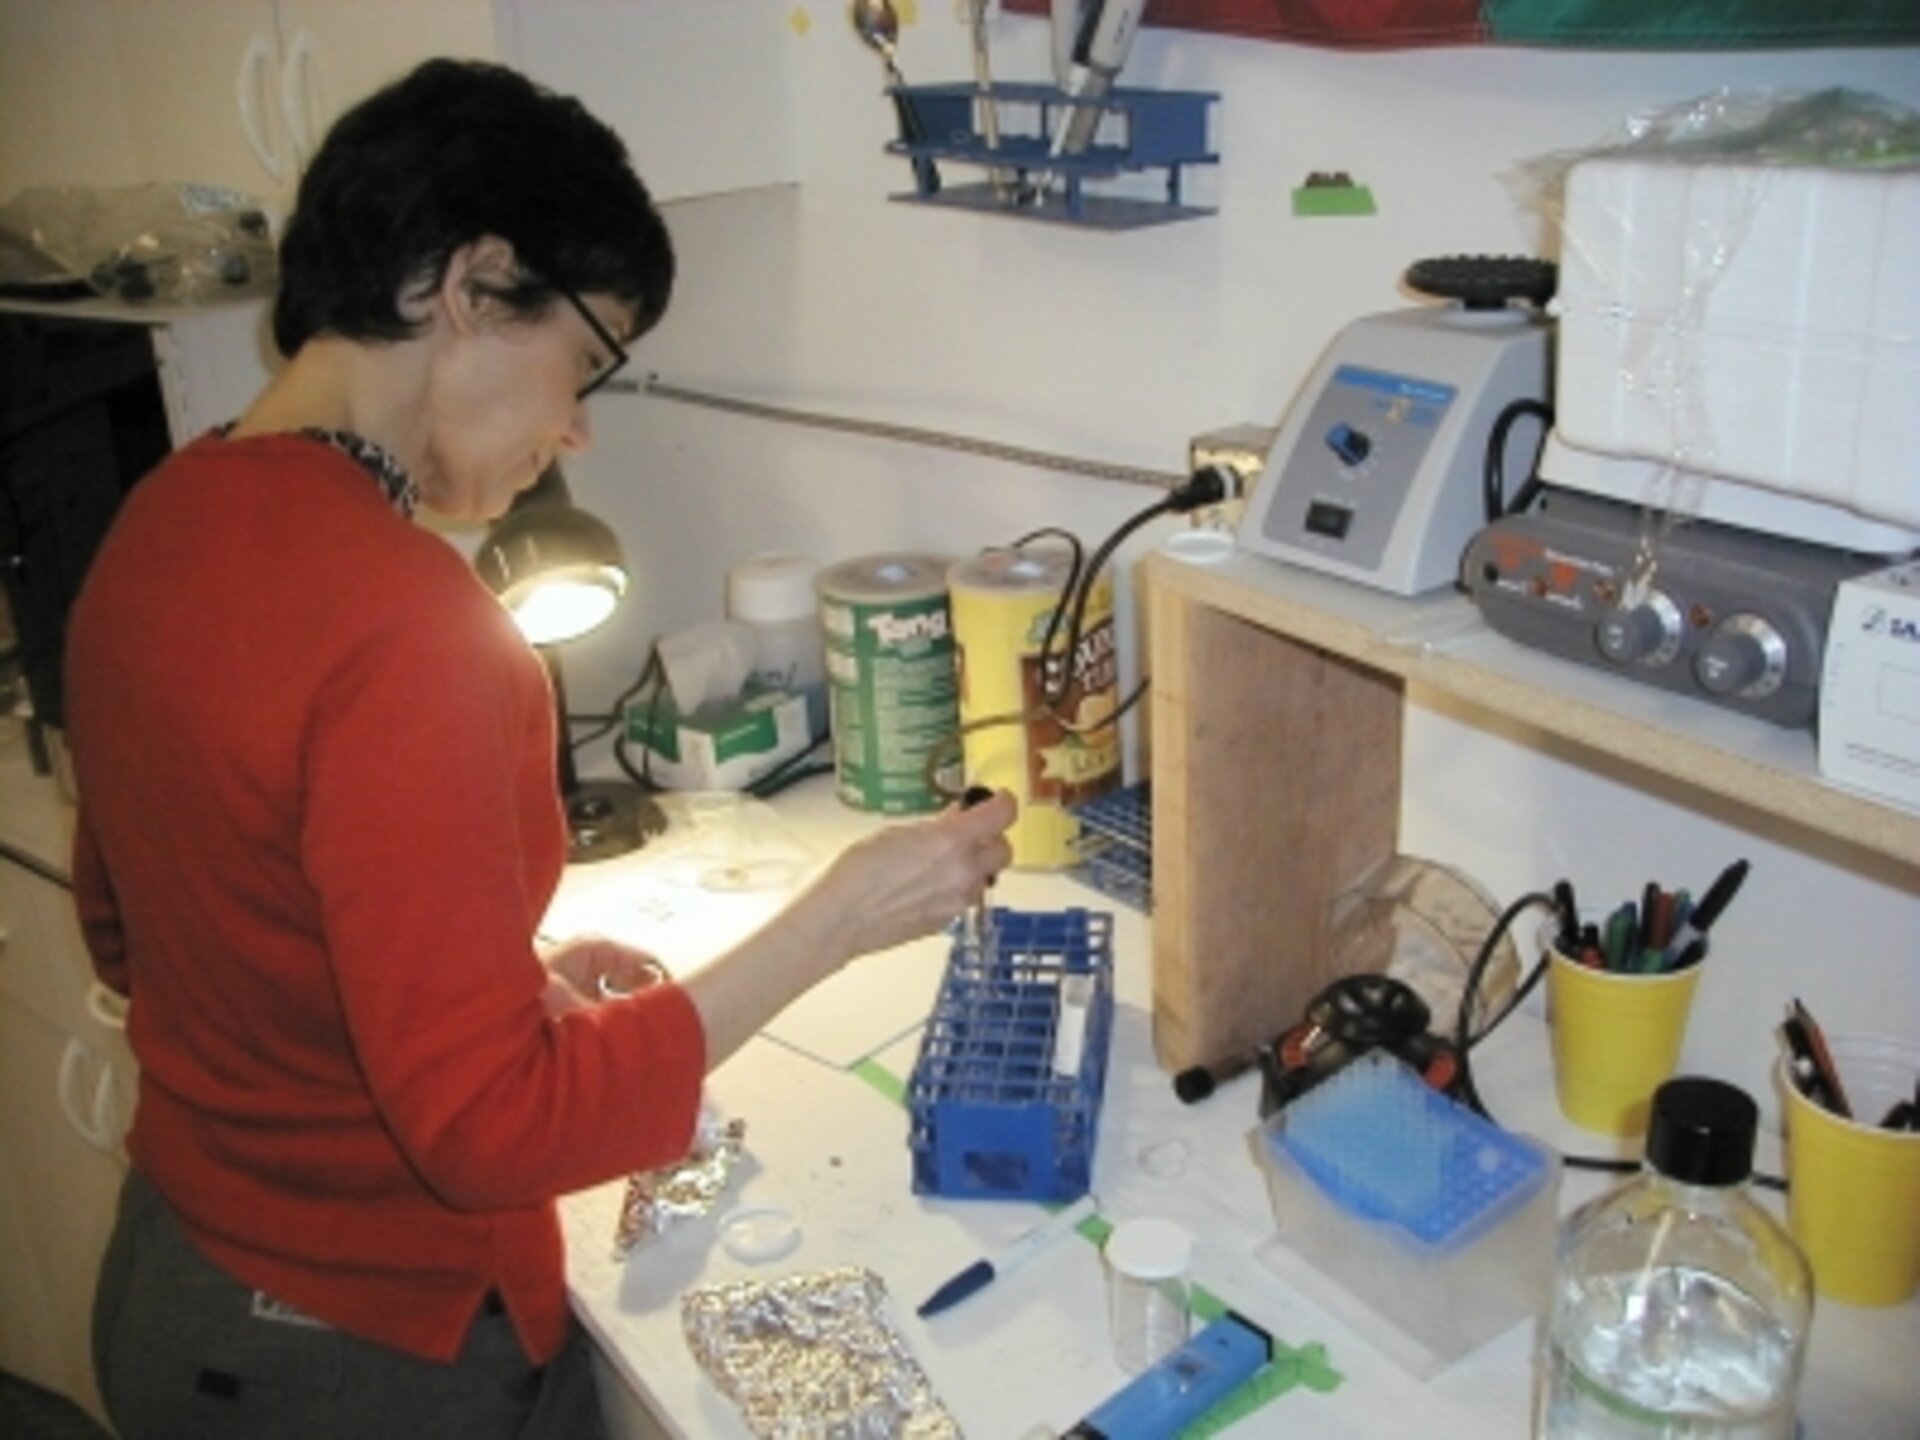 Biologist Nancy Wood working in the biology lab in the Ground floor